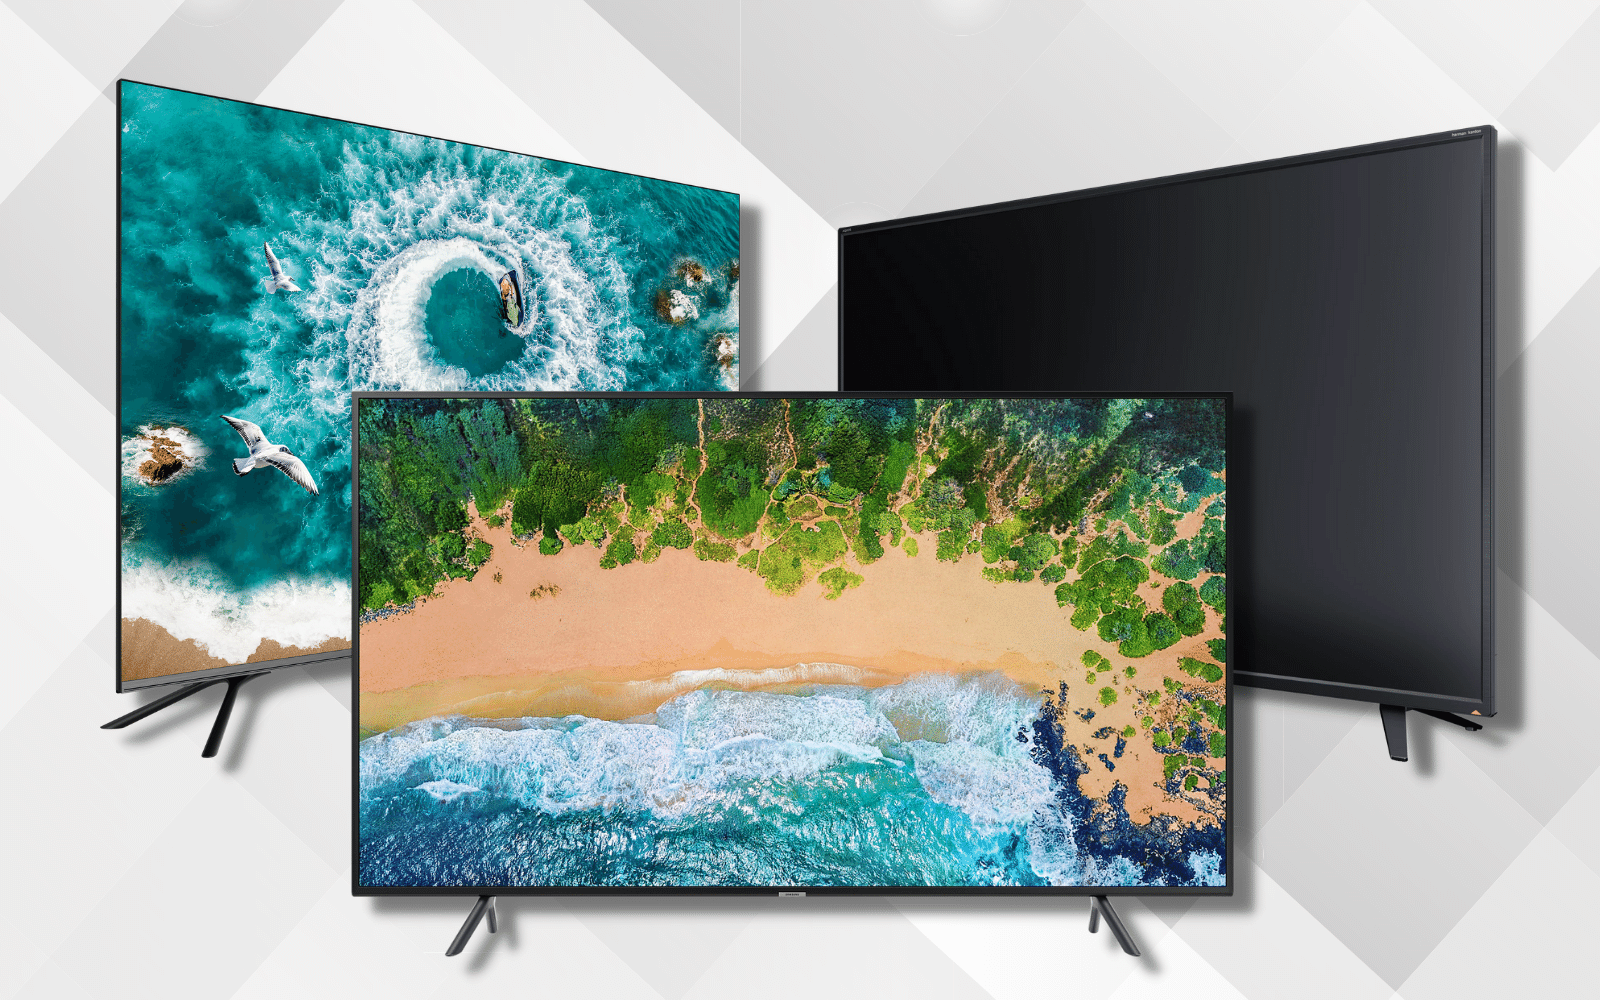 Buy Genuine Samsung 32 Inch Smart TV UA32T5300; HD Smart TV